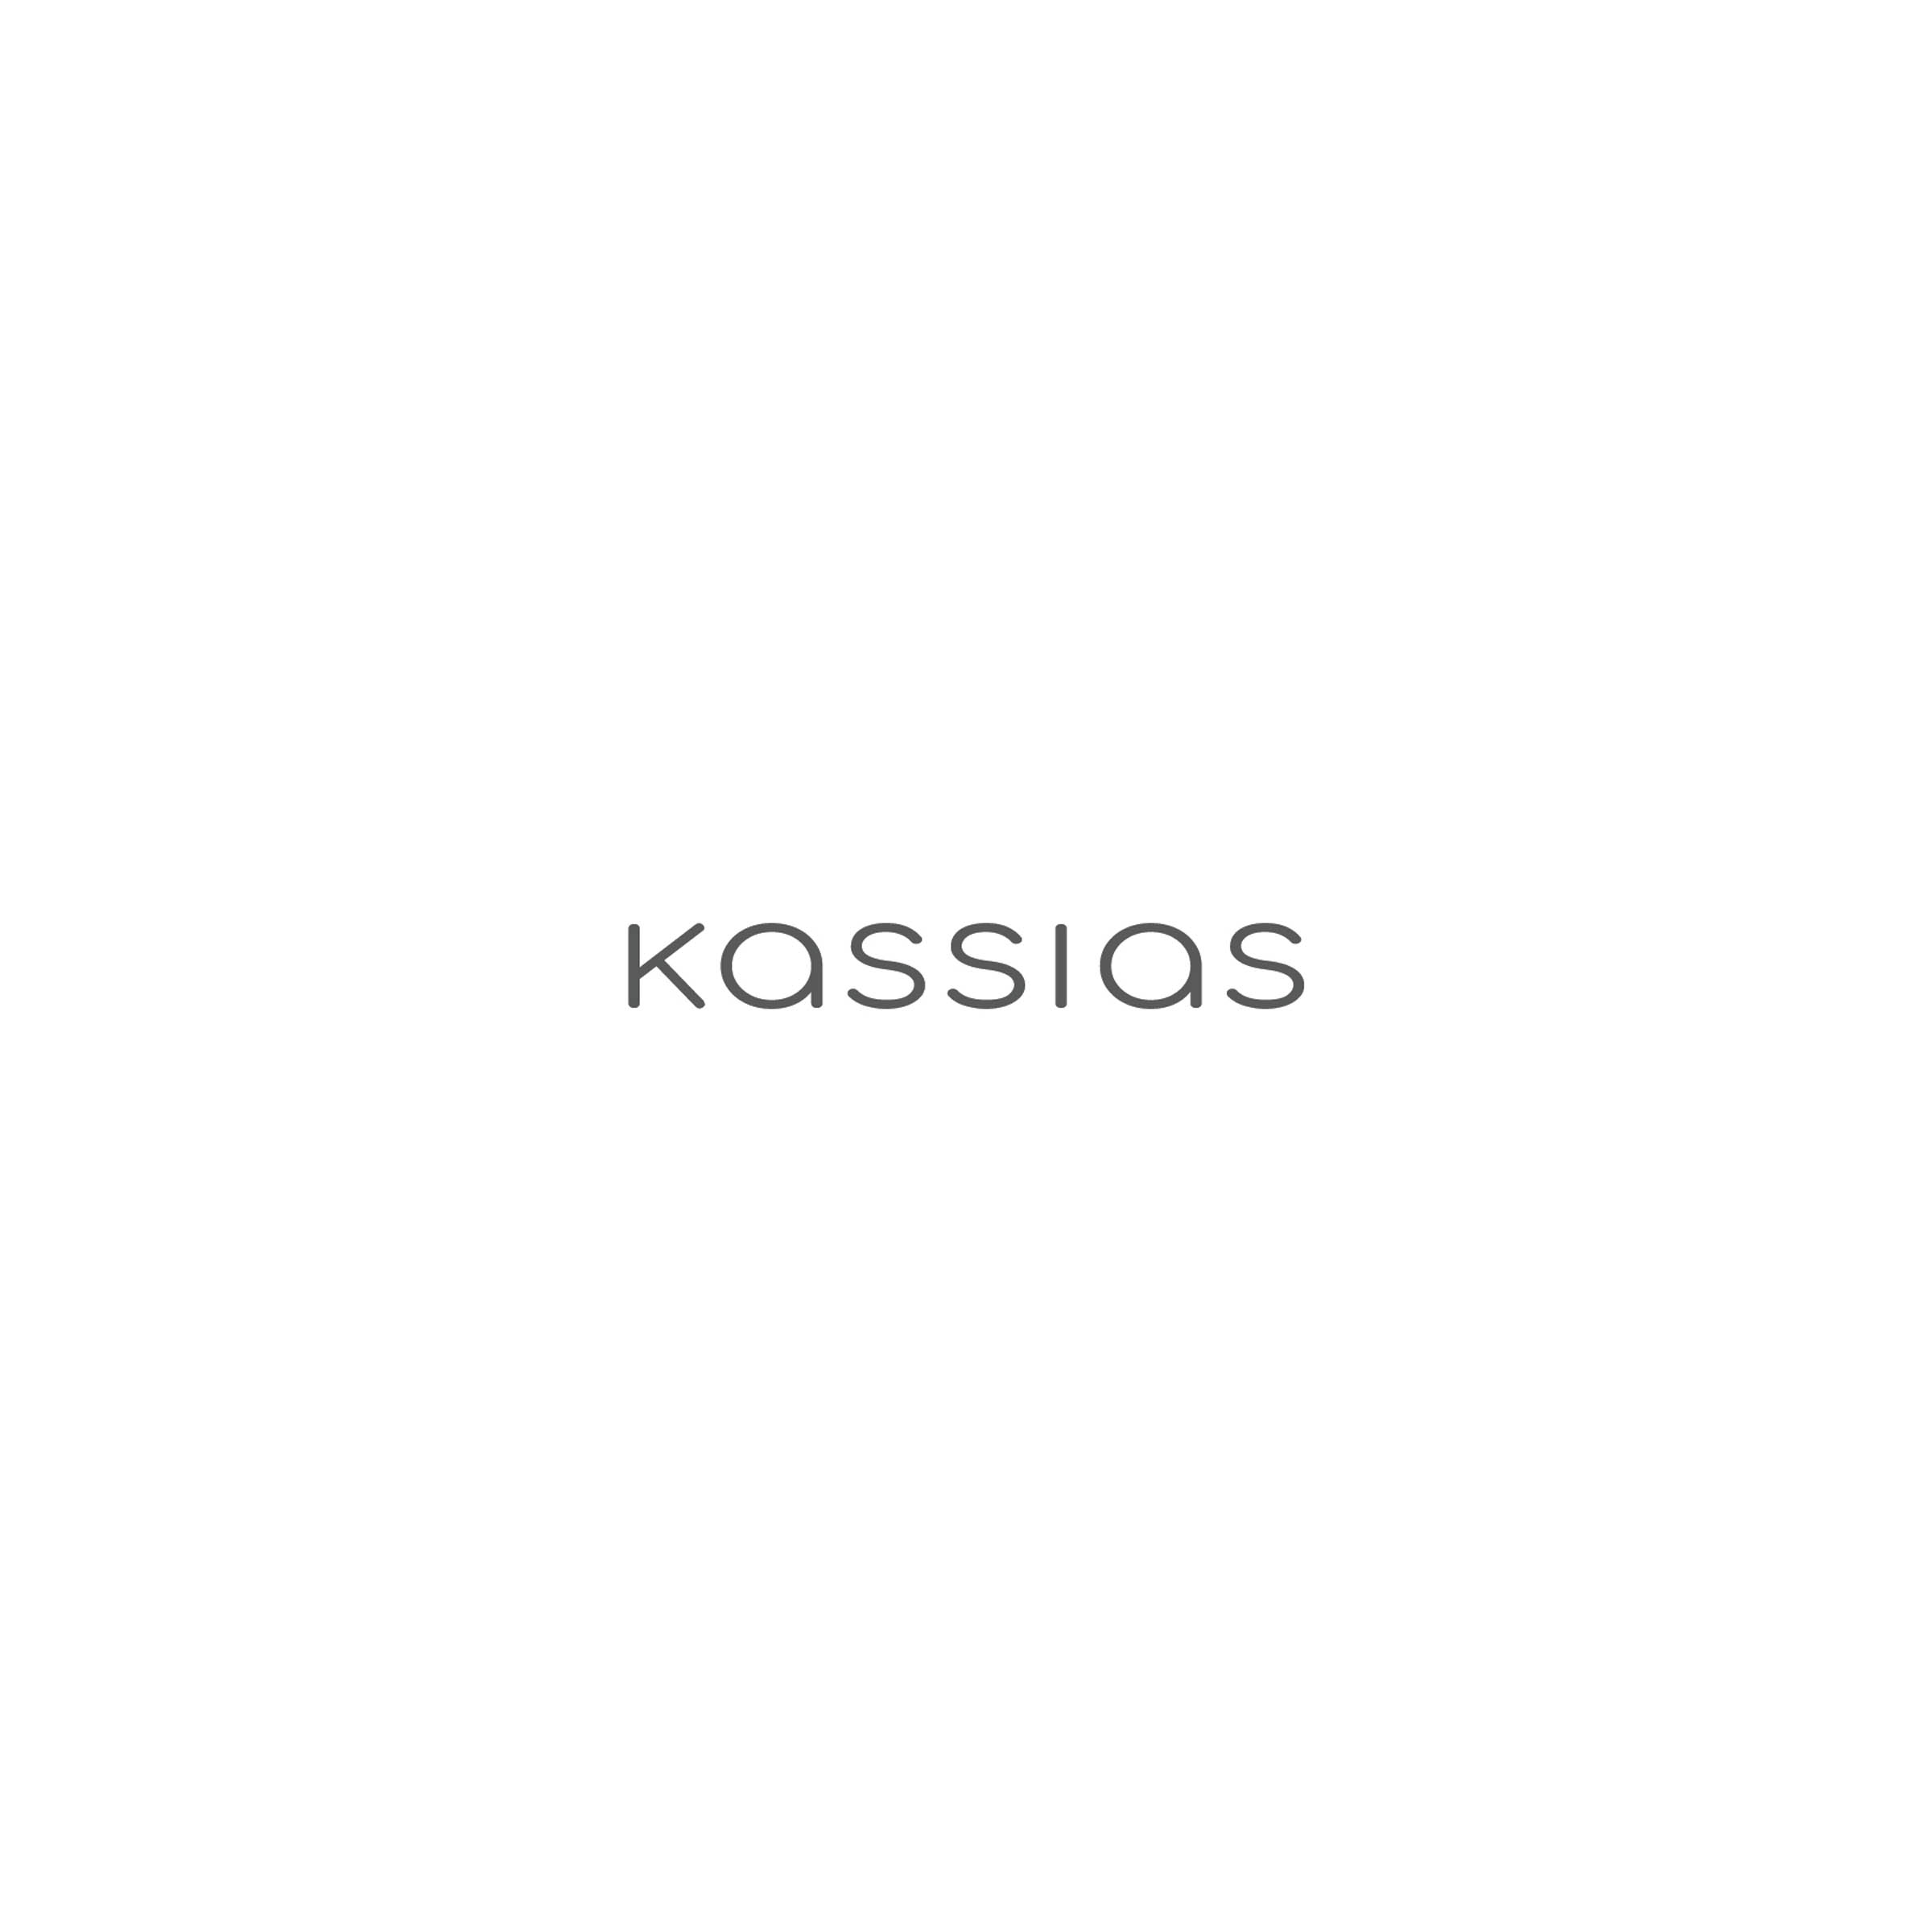 Kassias Logo